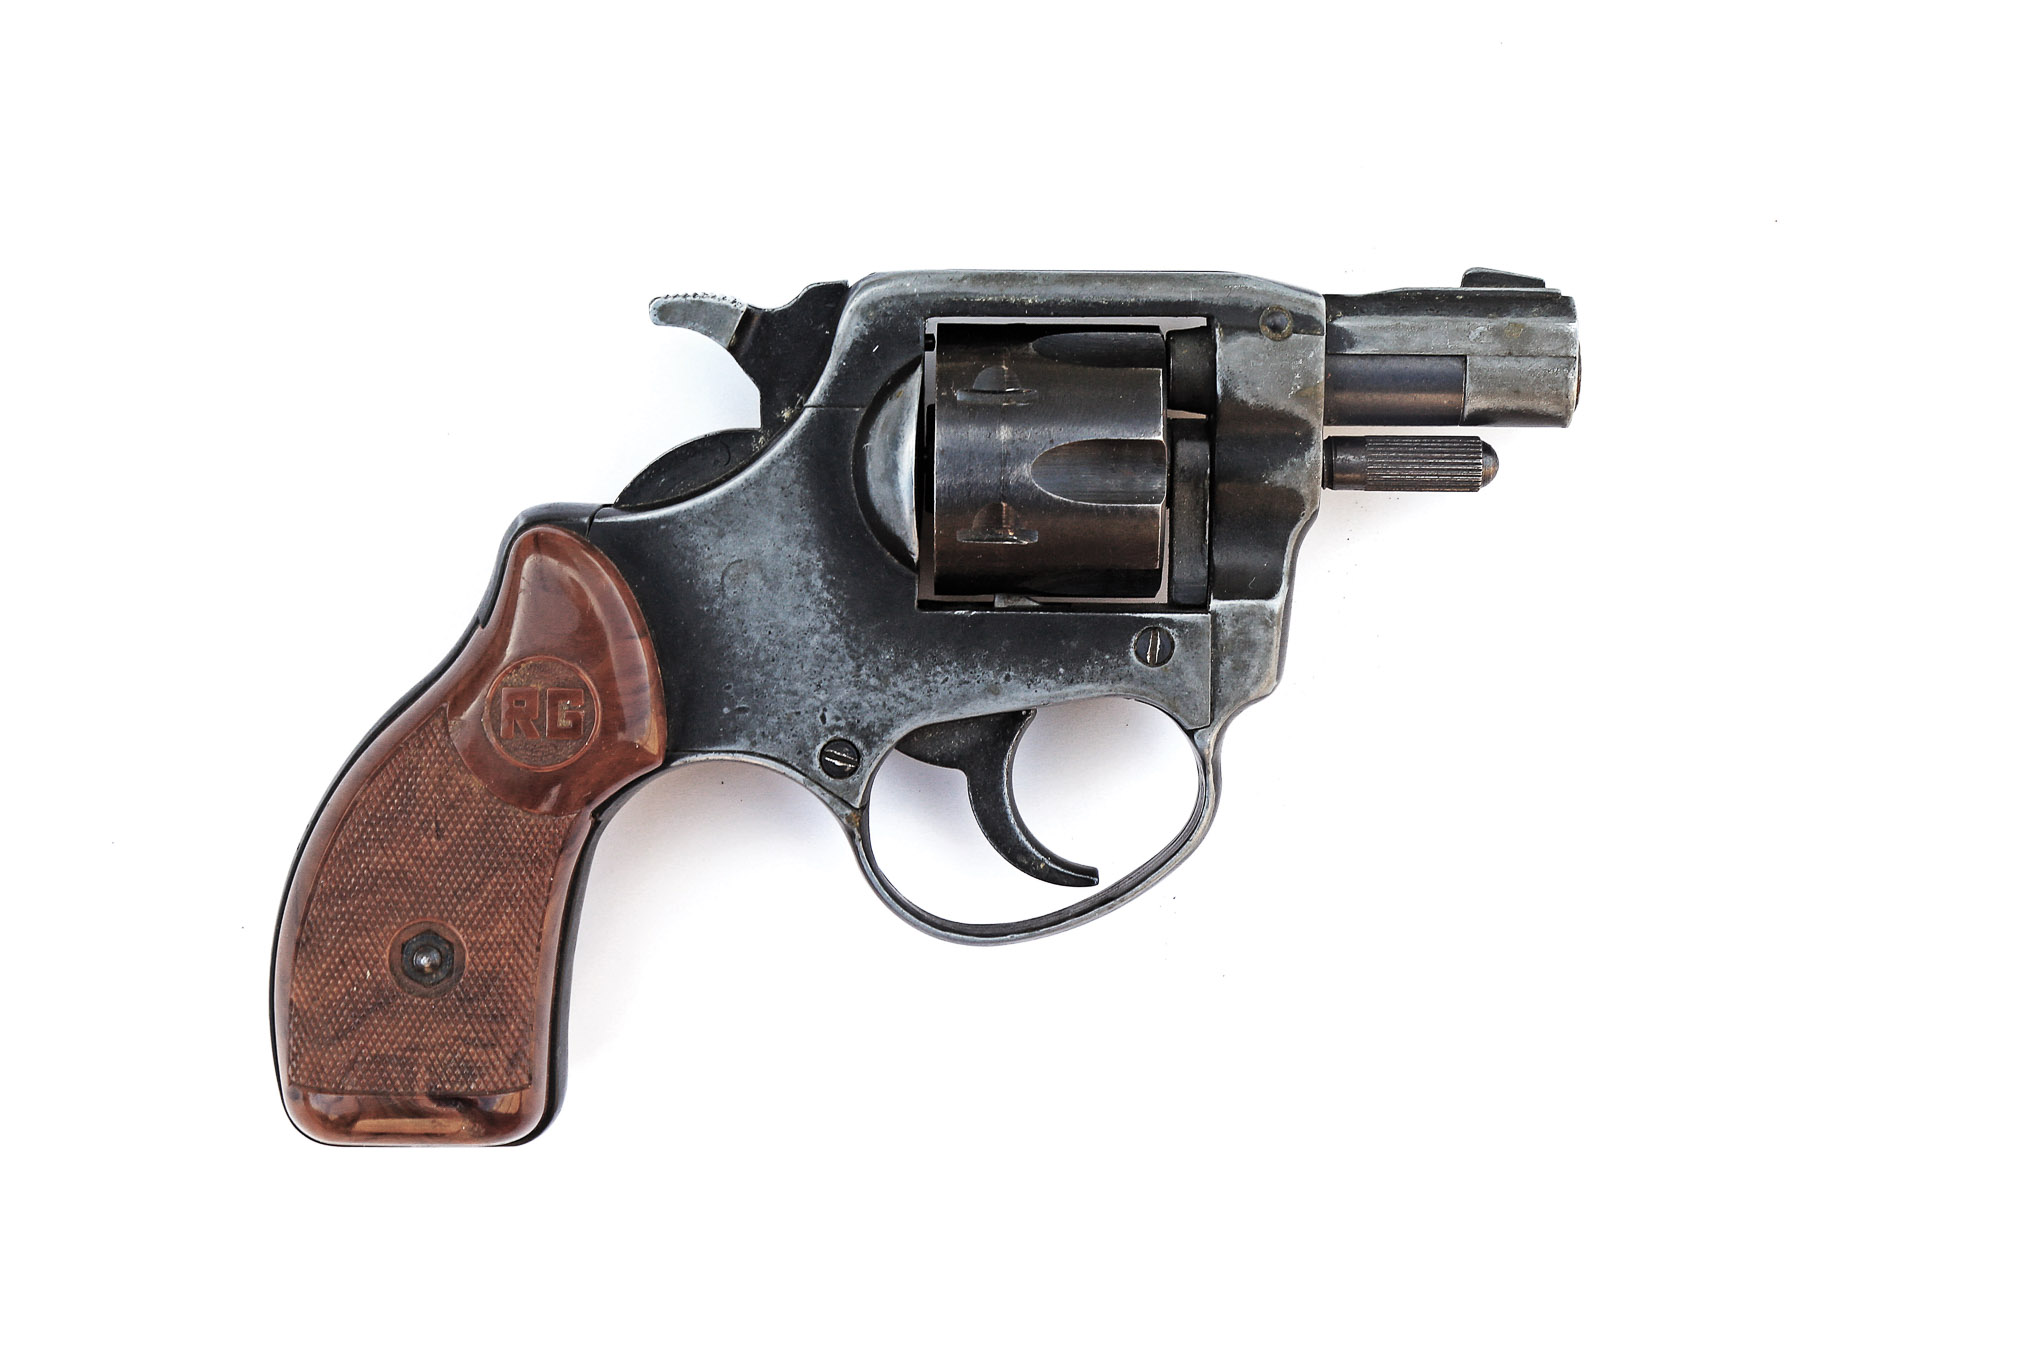 The RG-14 Revolver: The Gun that Got the Gipper